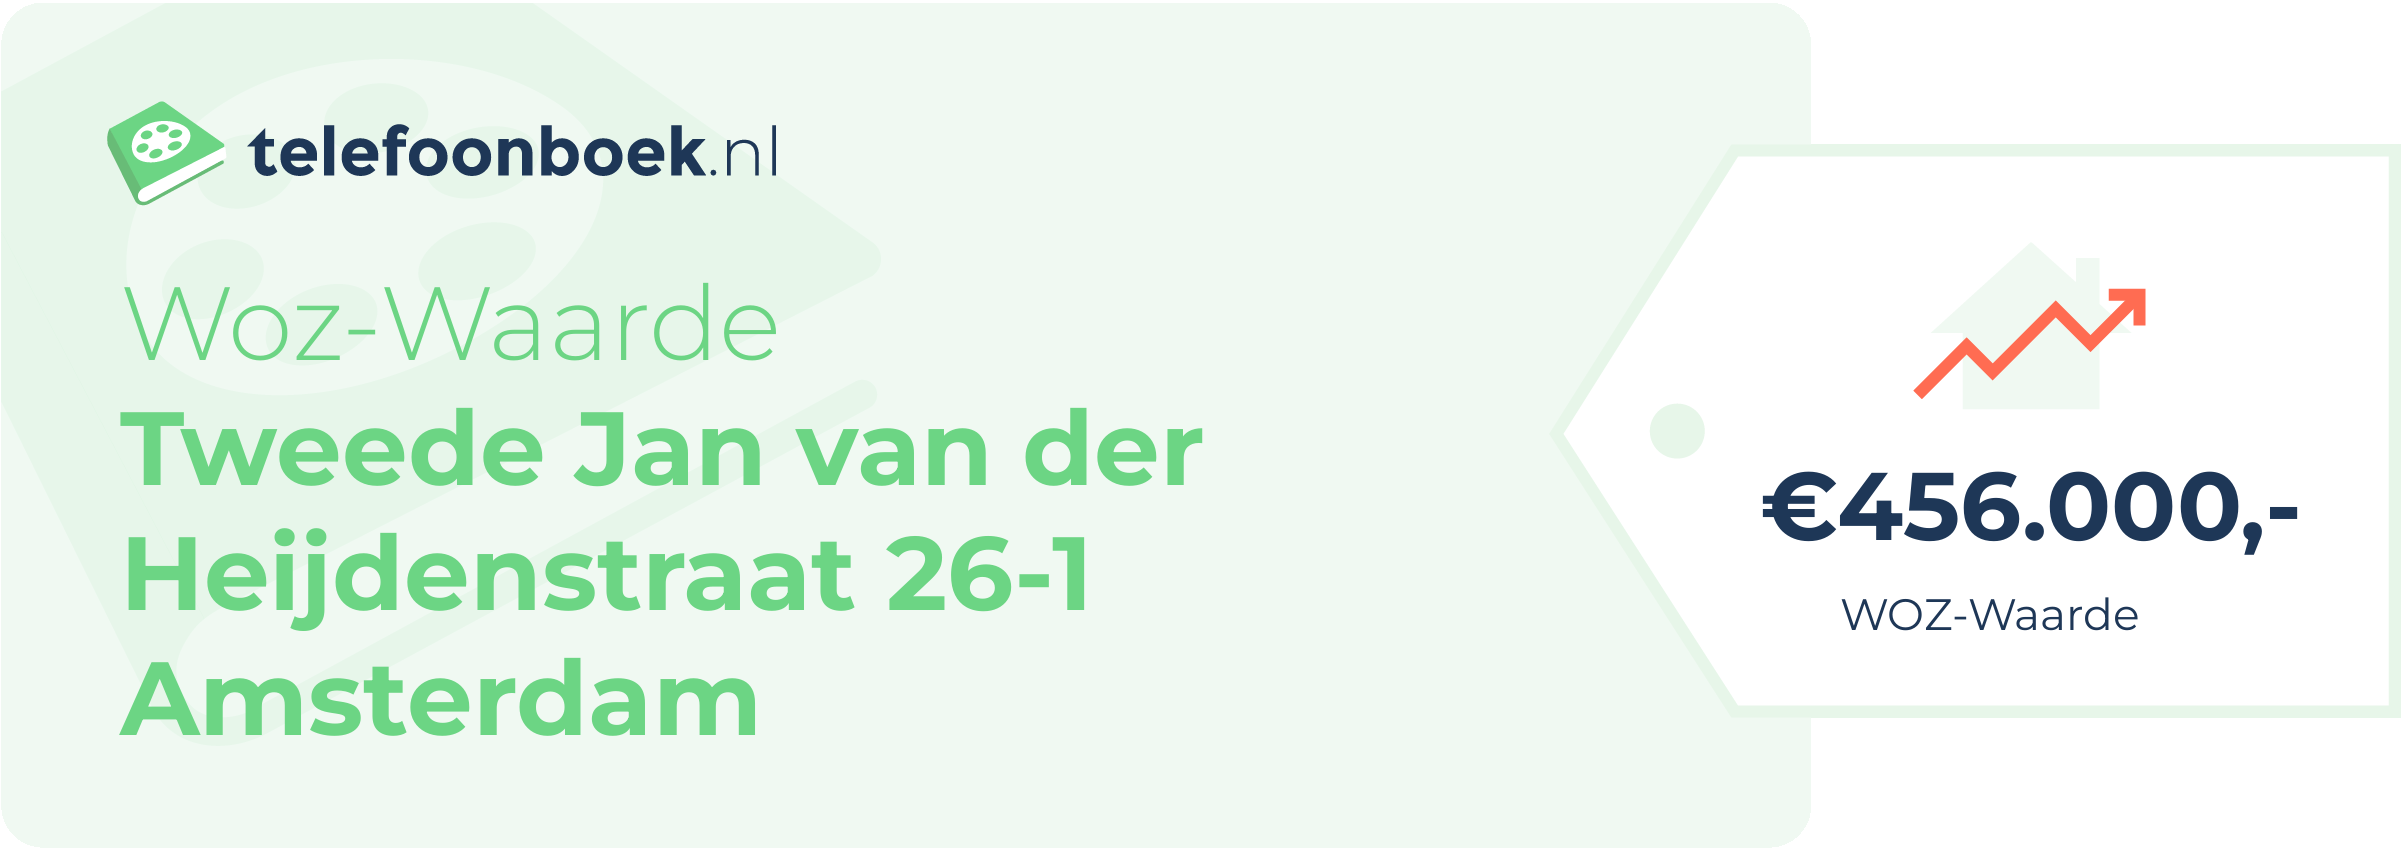 WOZ-waarde Tweede Jan Van Der Heijdenstraat 26-1 Amsterdam